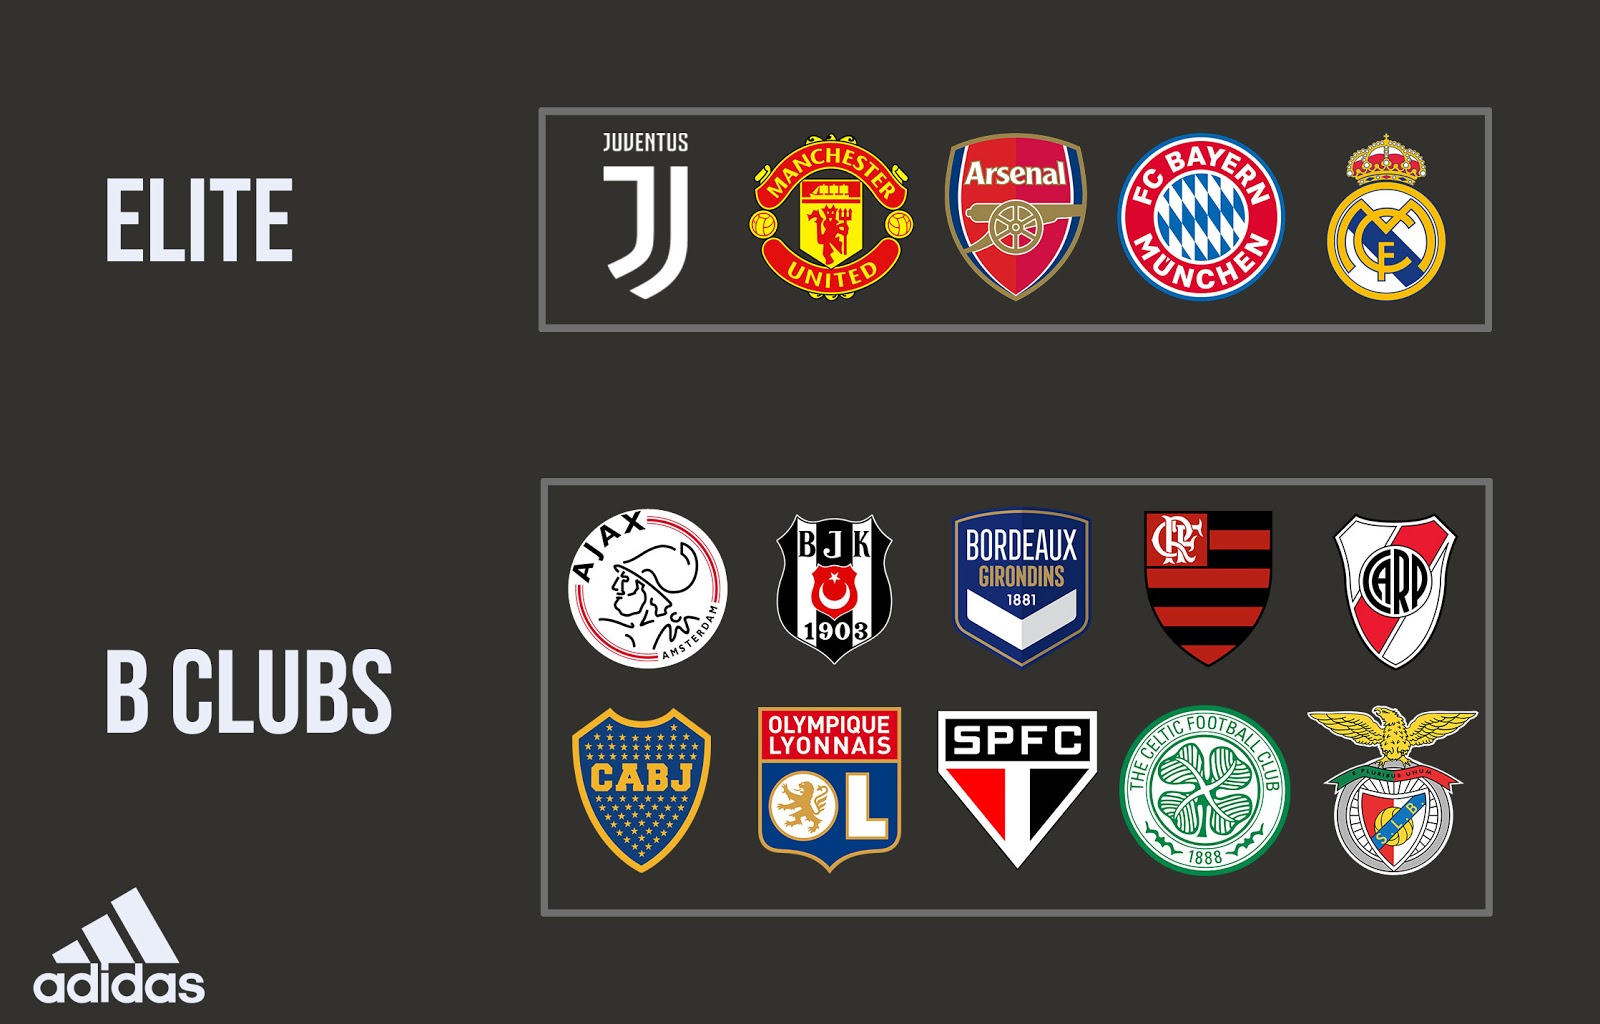 Biblia no relacionado Numérico Adidas Football Sponsorships Ranking - "All" Elite, B Teams & Premium Clubs  Of The German Brand - Footy Headlines